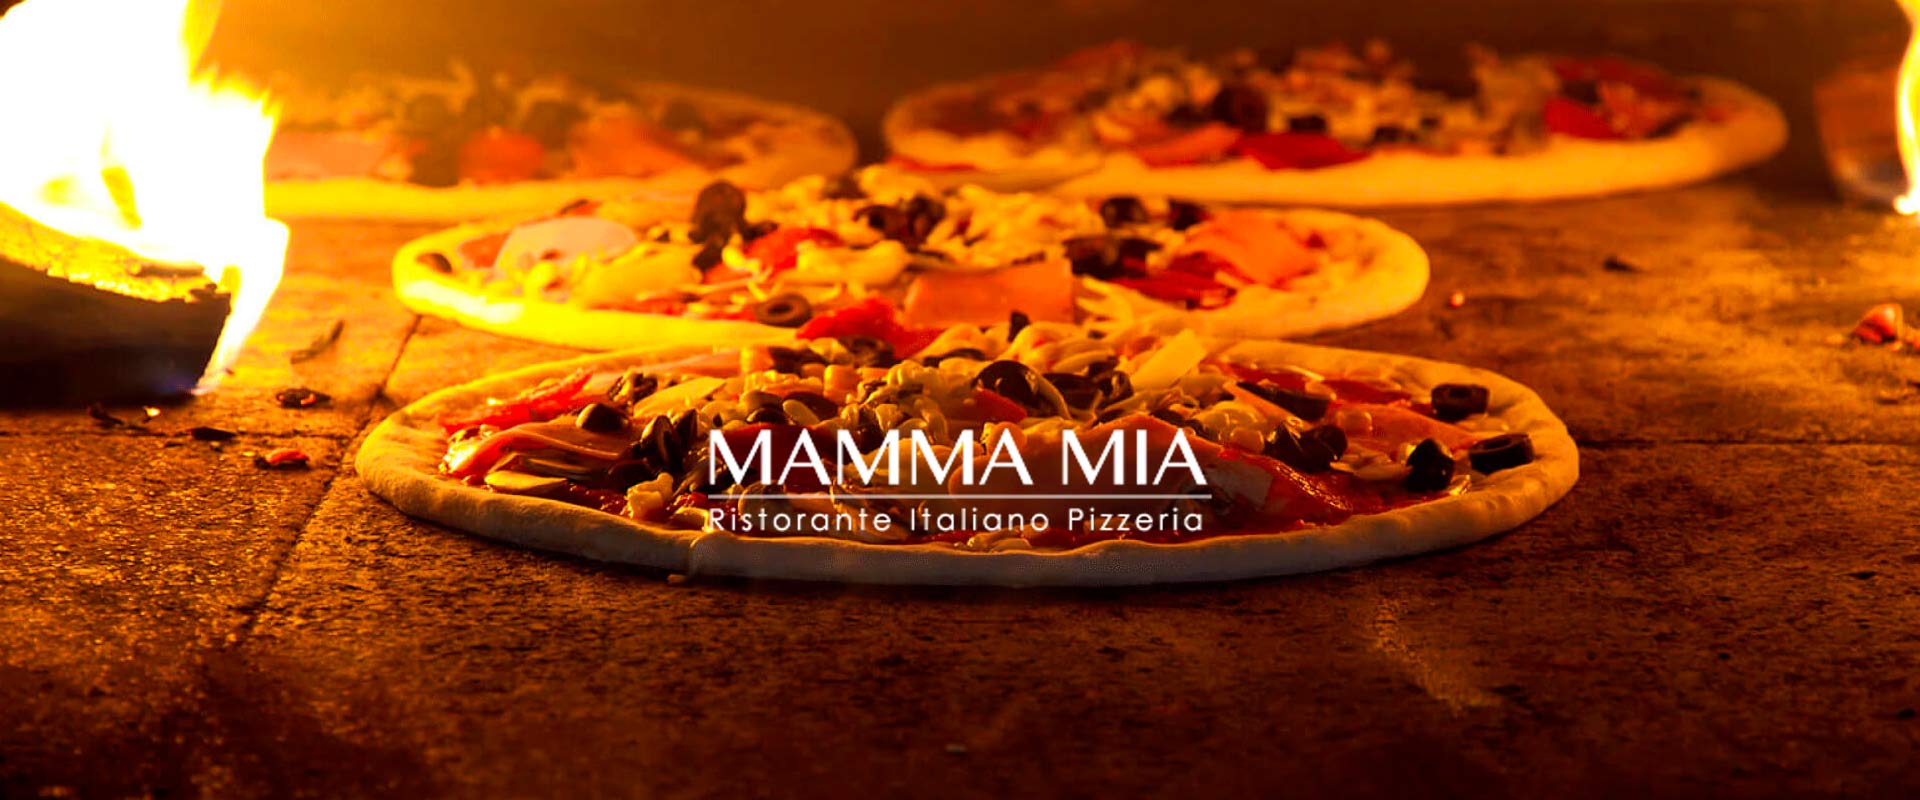 Restaurant Mammamia Pizza Marrakech Guéliz